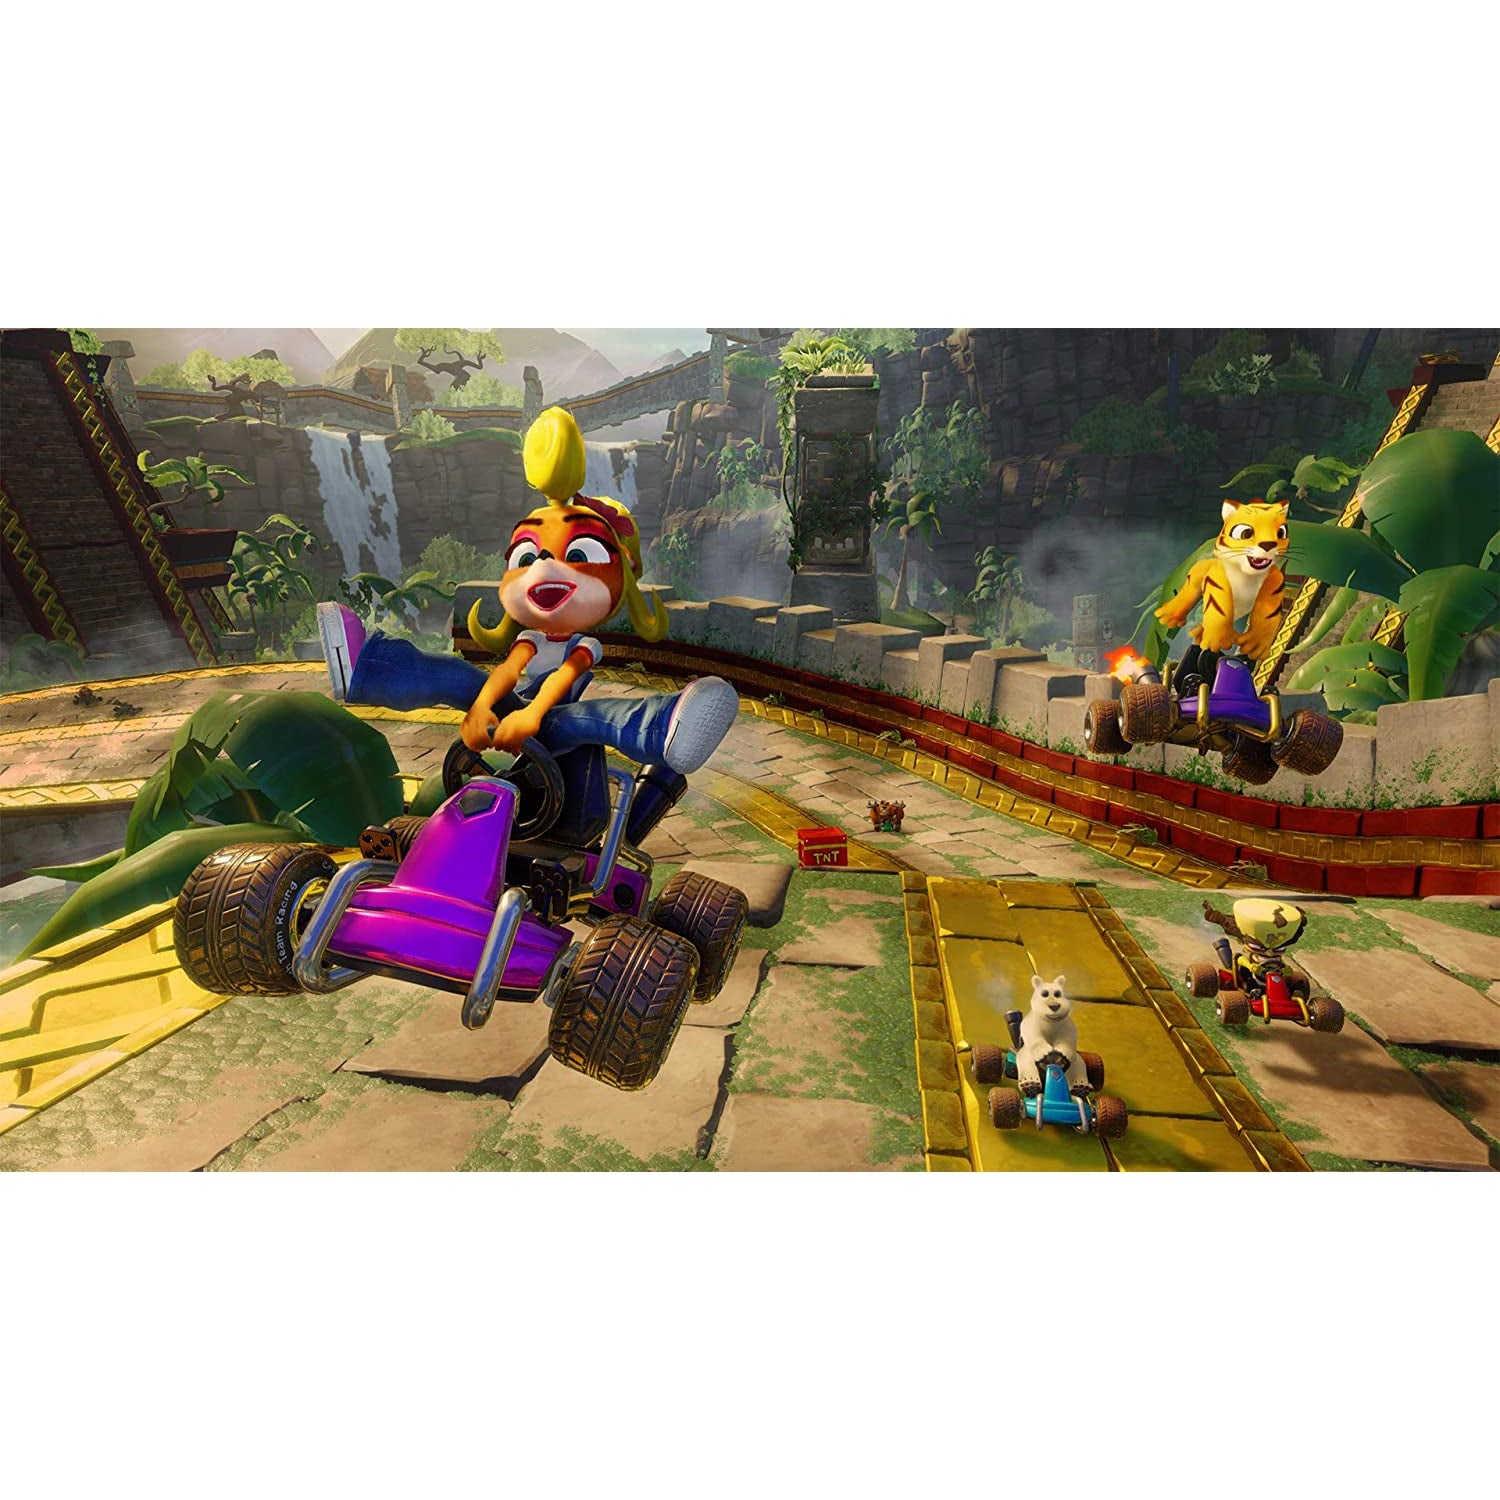 Crash Team Racing Nitro-Fueled - Nitros Oxide Edition (Nintendo Switch)